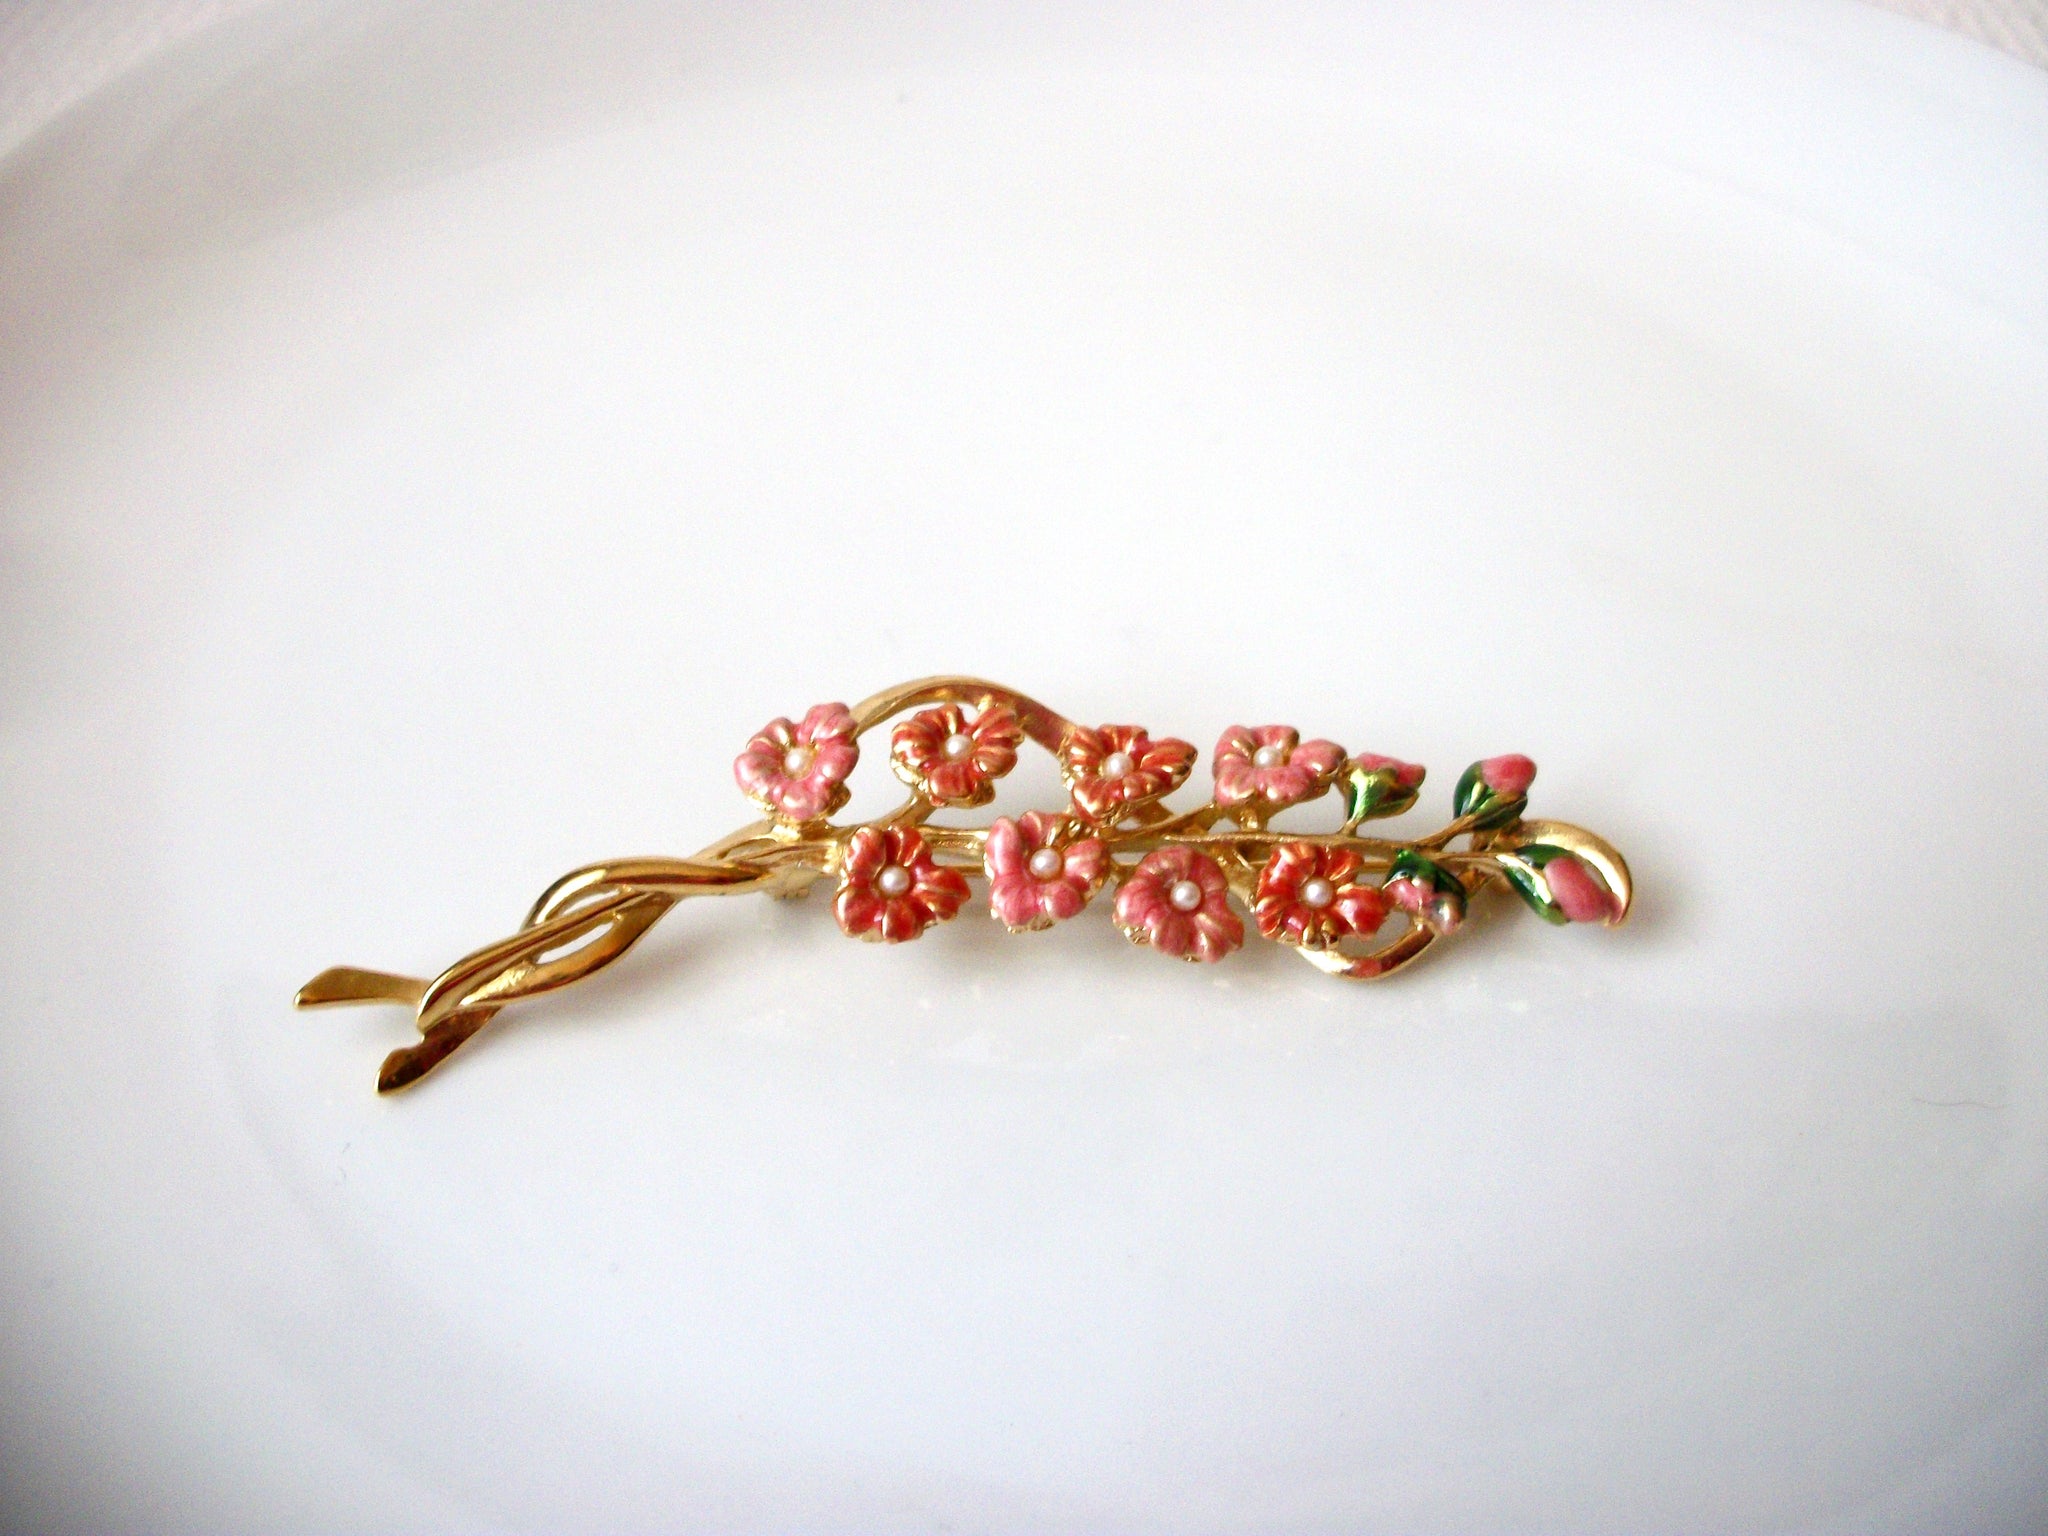 Vintage Enameled Floral Pin, Flower Brooch 113016